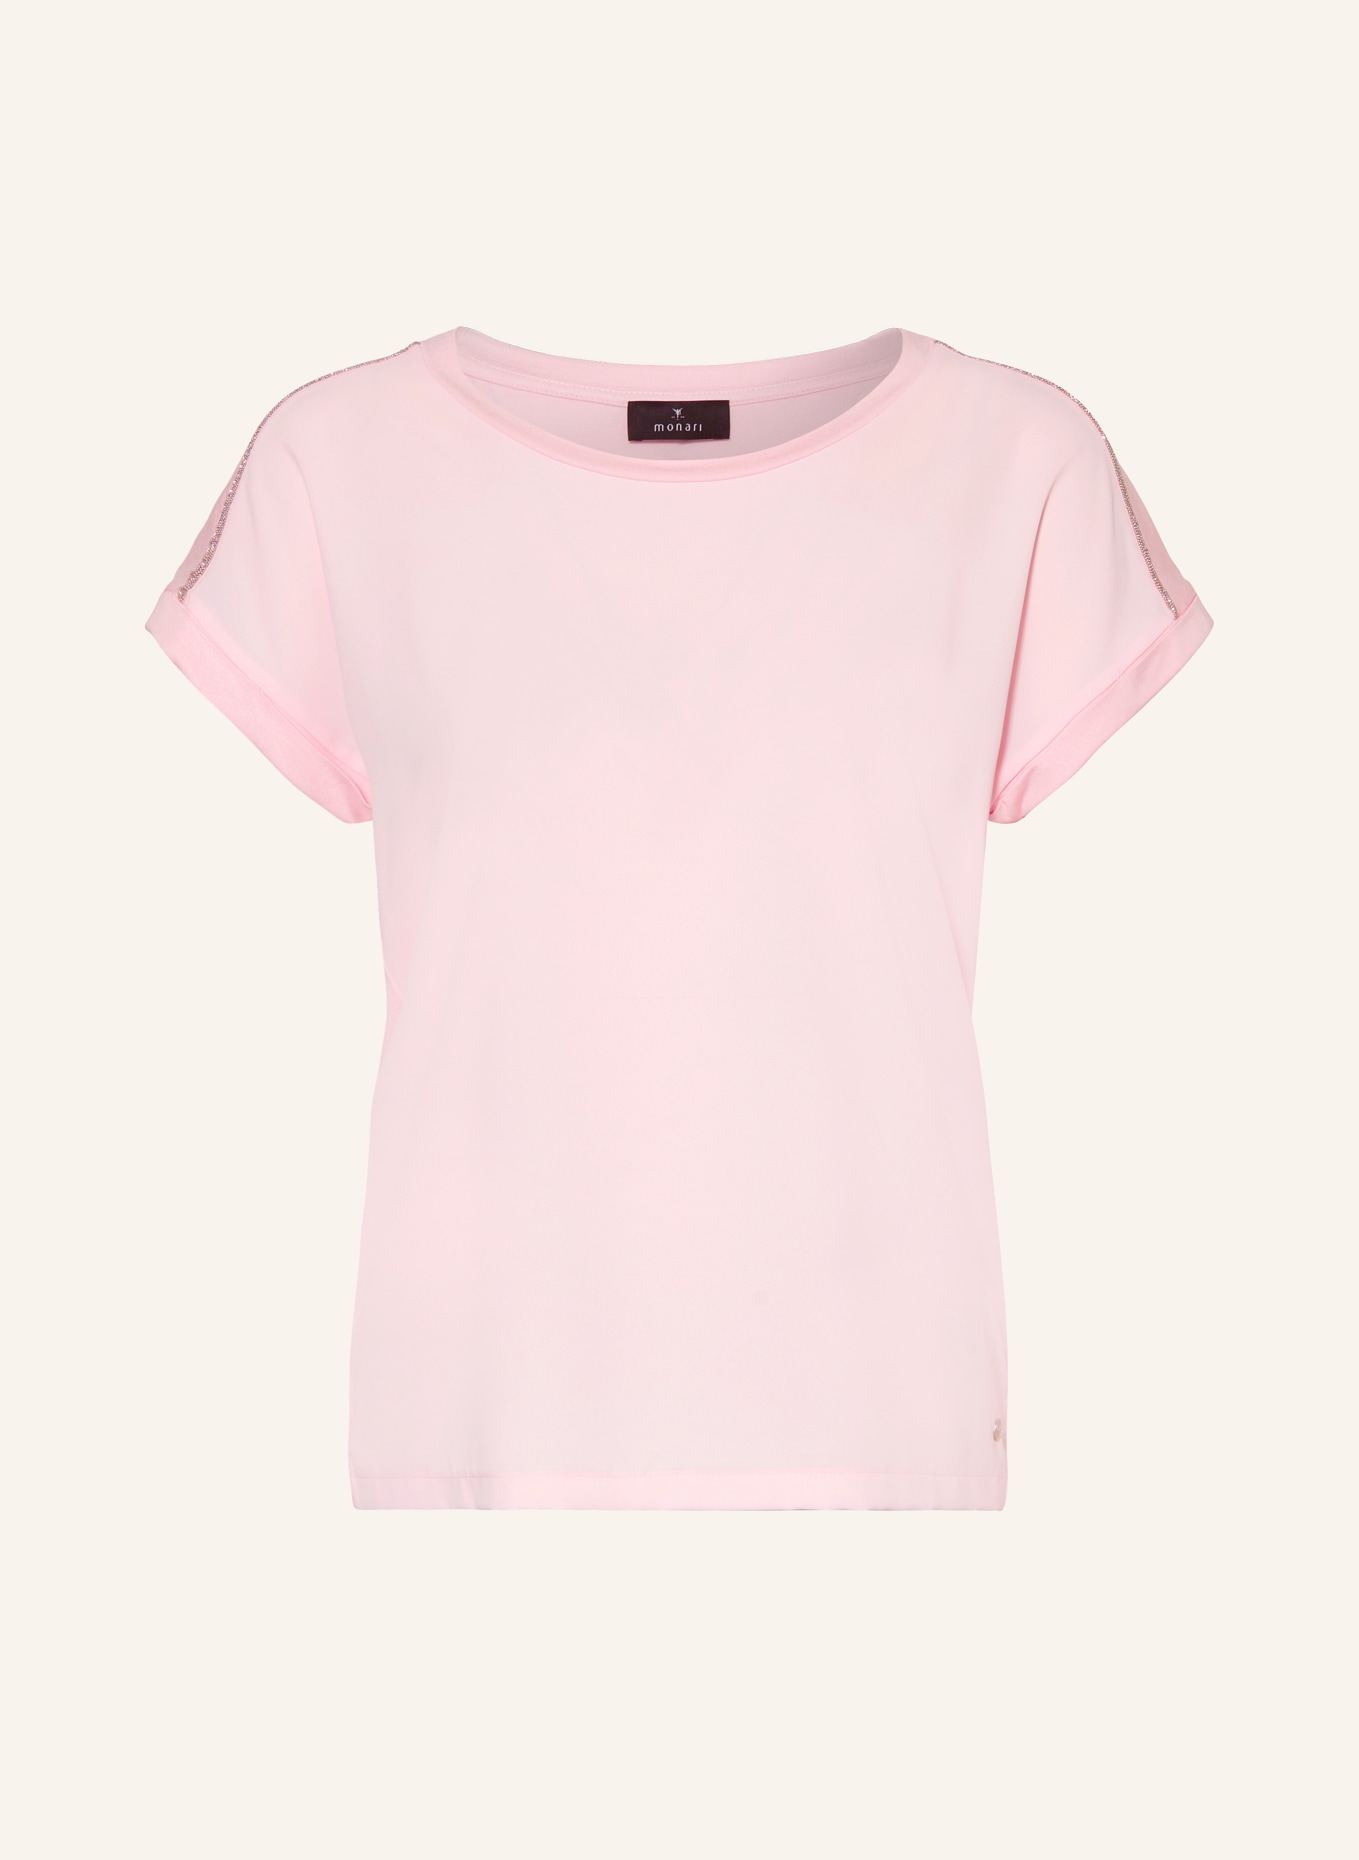 monari T-Shirt im Materialmix mit Schmuckperlen, Farbe: ROSA (Bild 1)